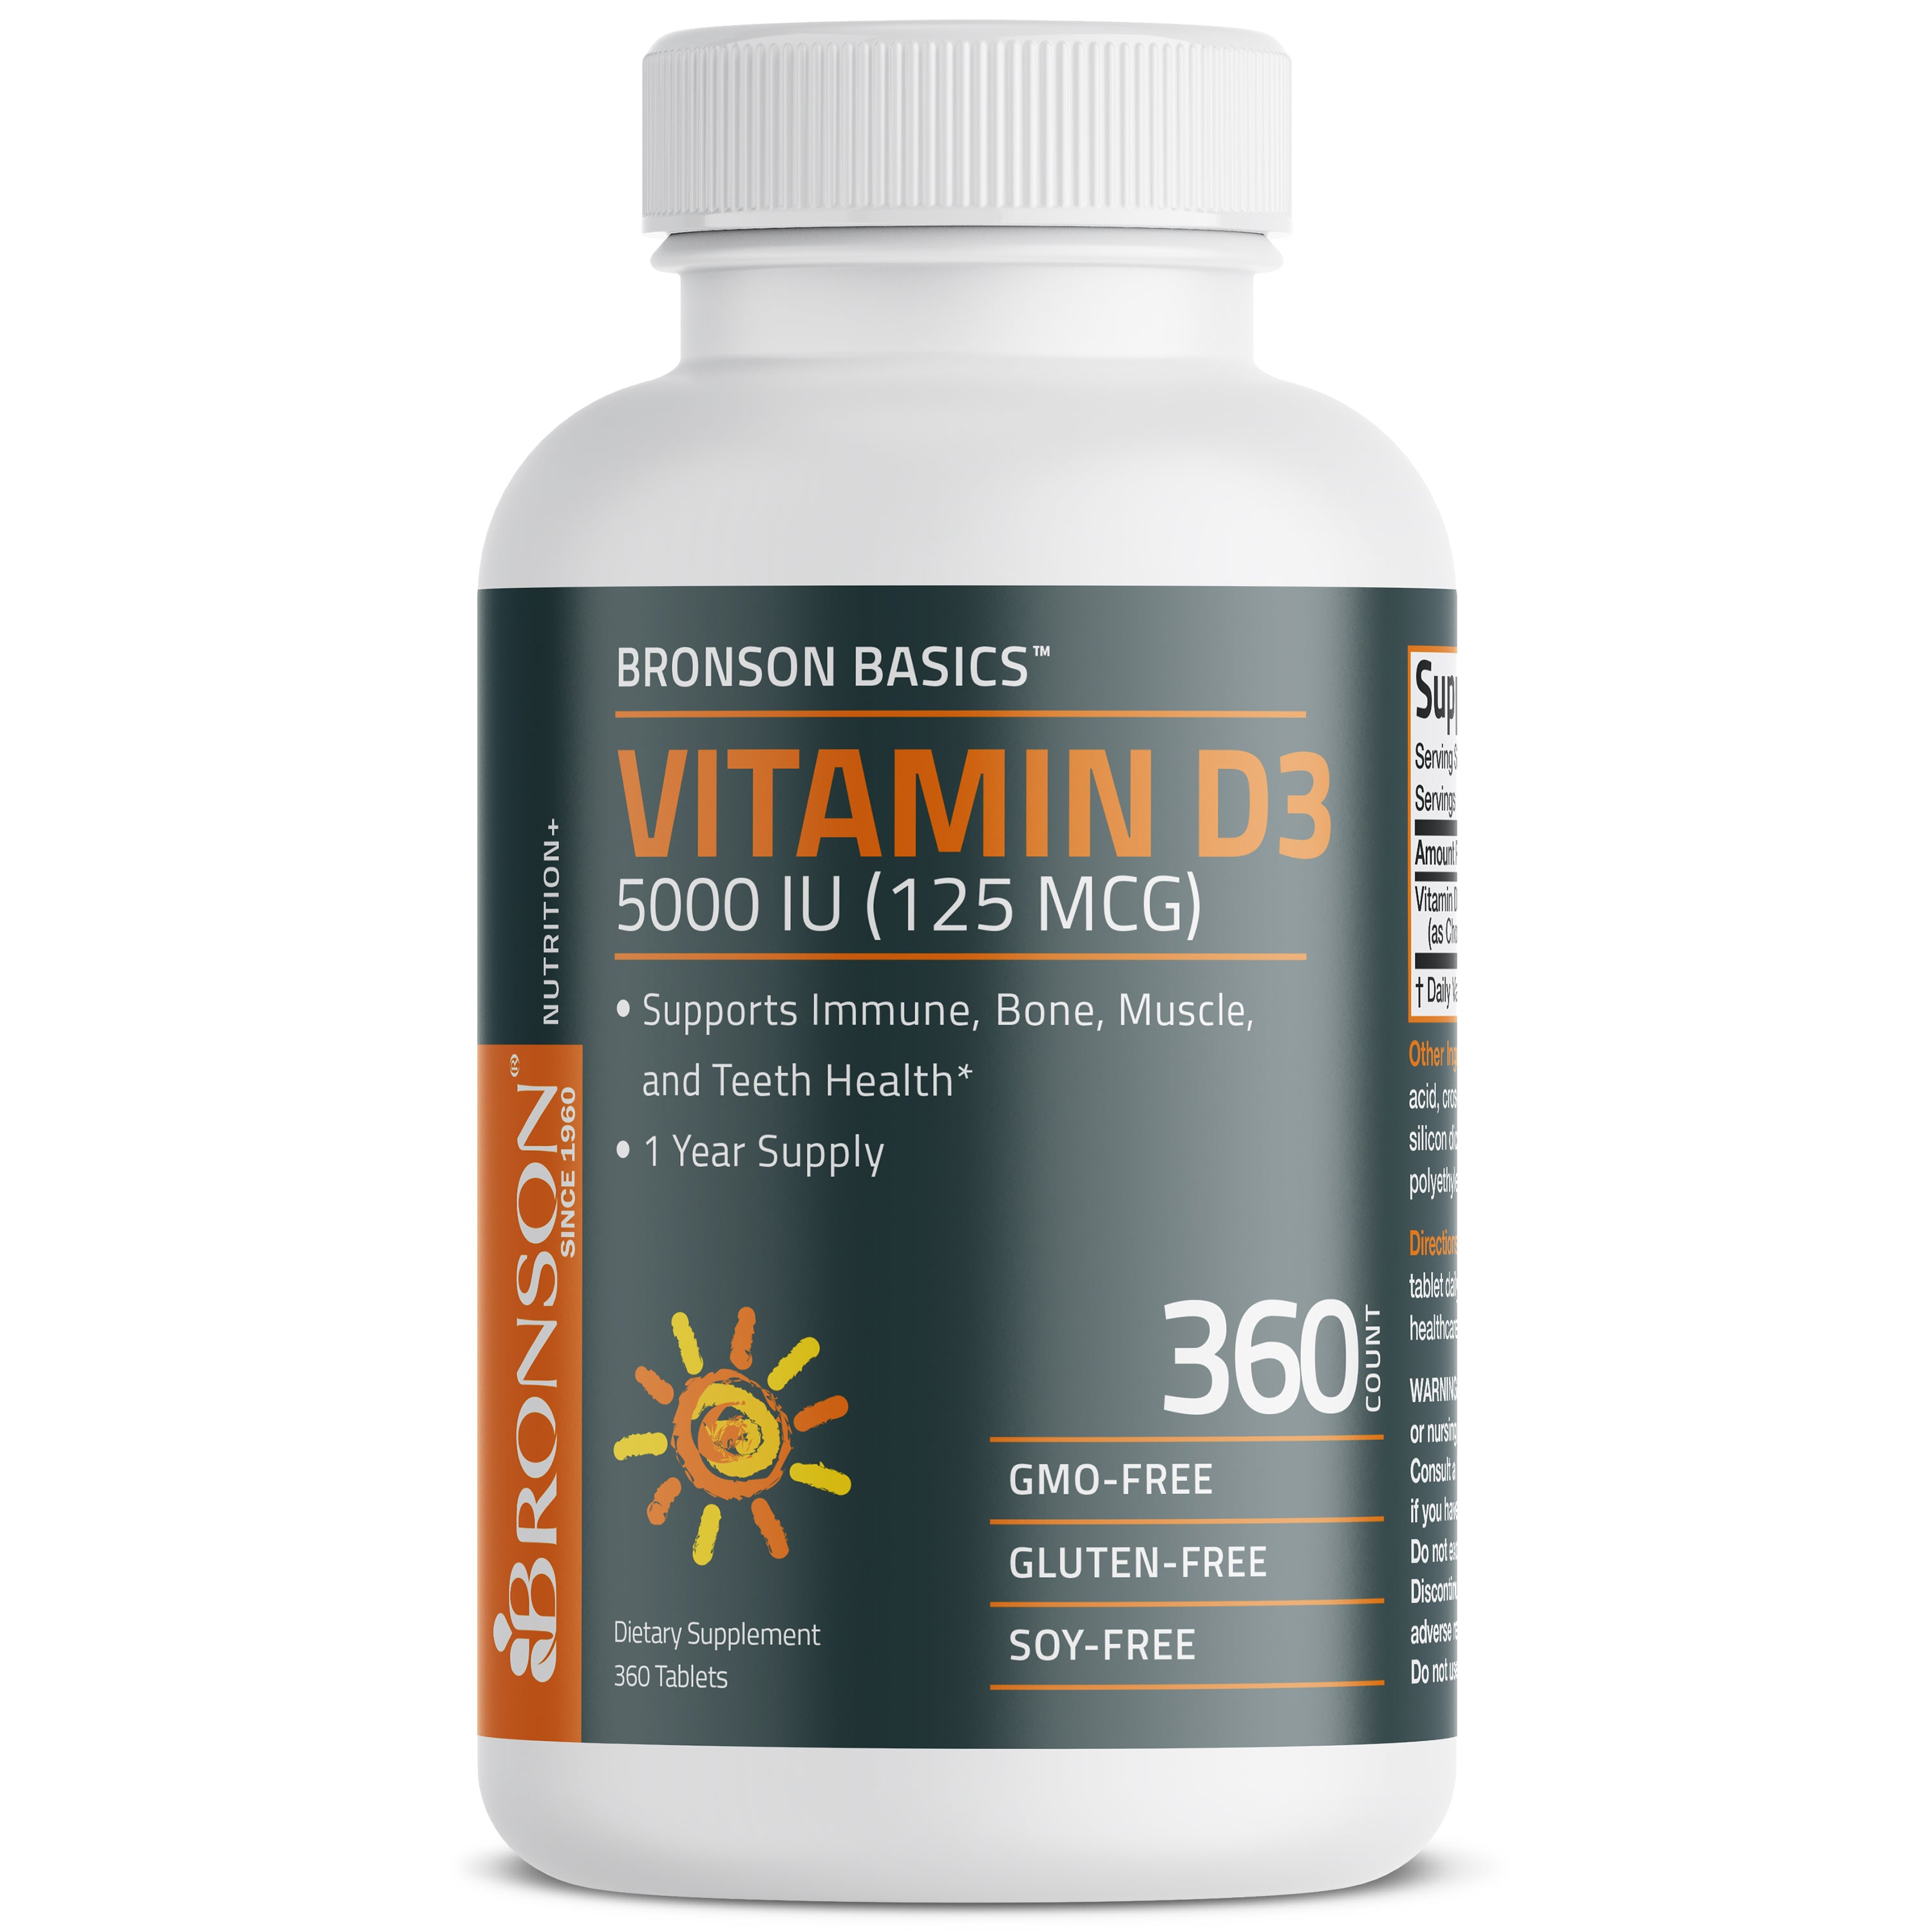 Vitamin D3 5,000 IU (125 MCG), 360 Tablets view 1 of 4